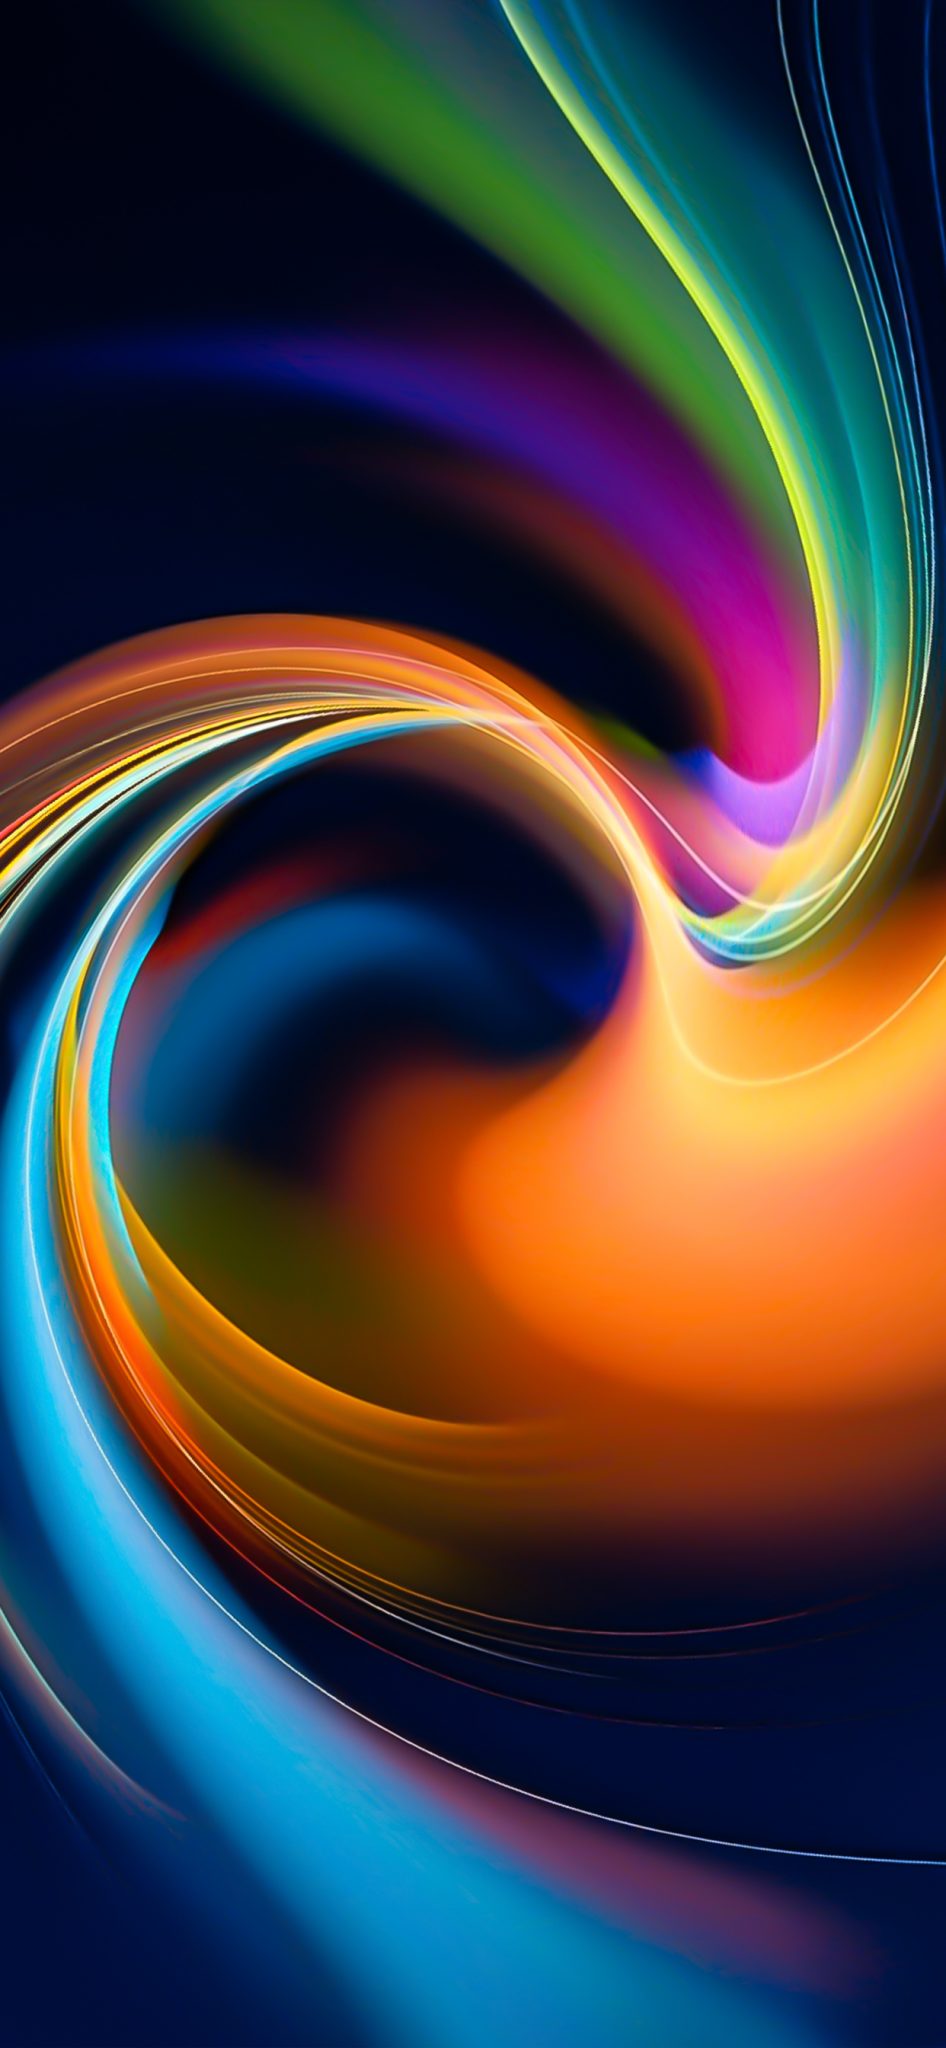 Orange and blue swirl by Hk3ToN | Zollotech